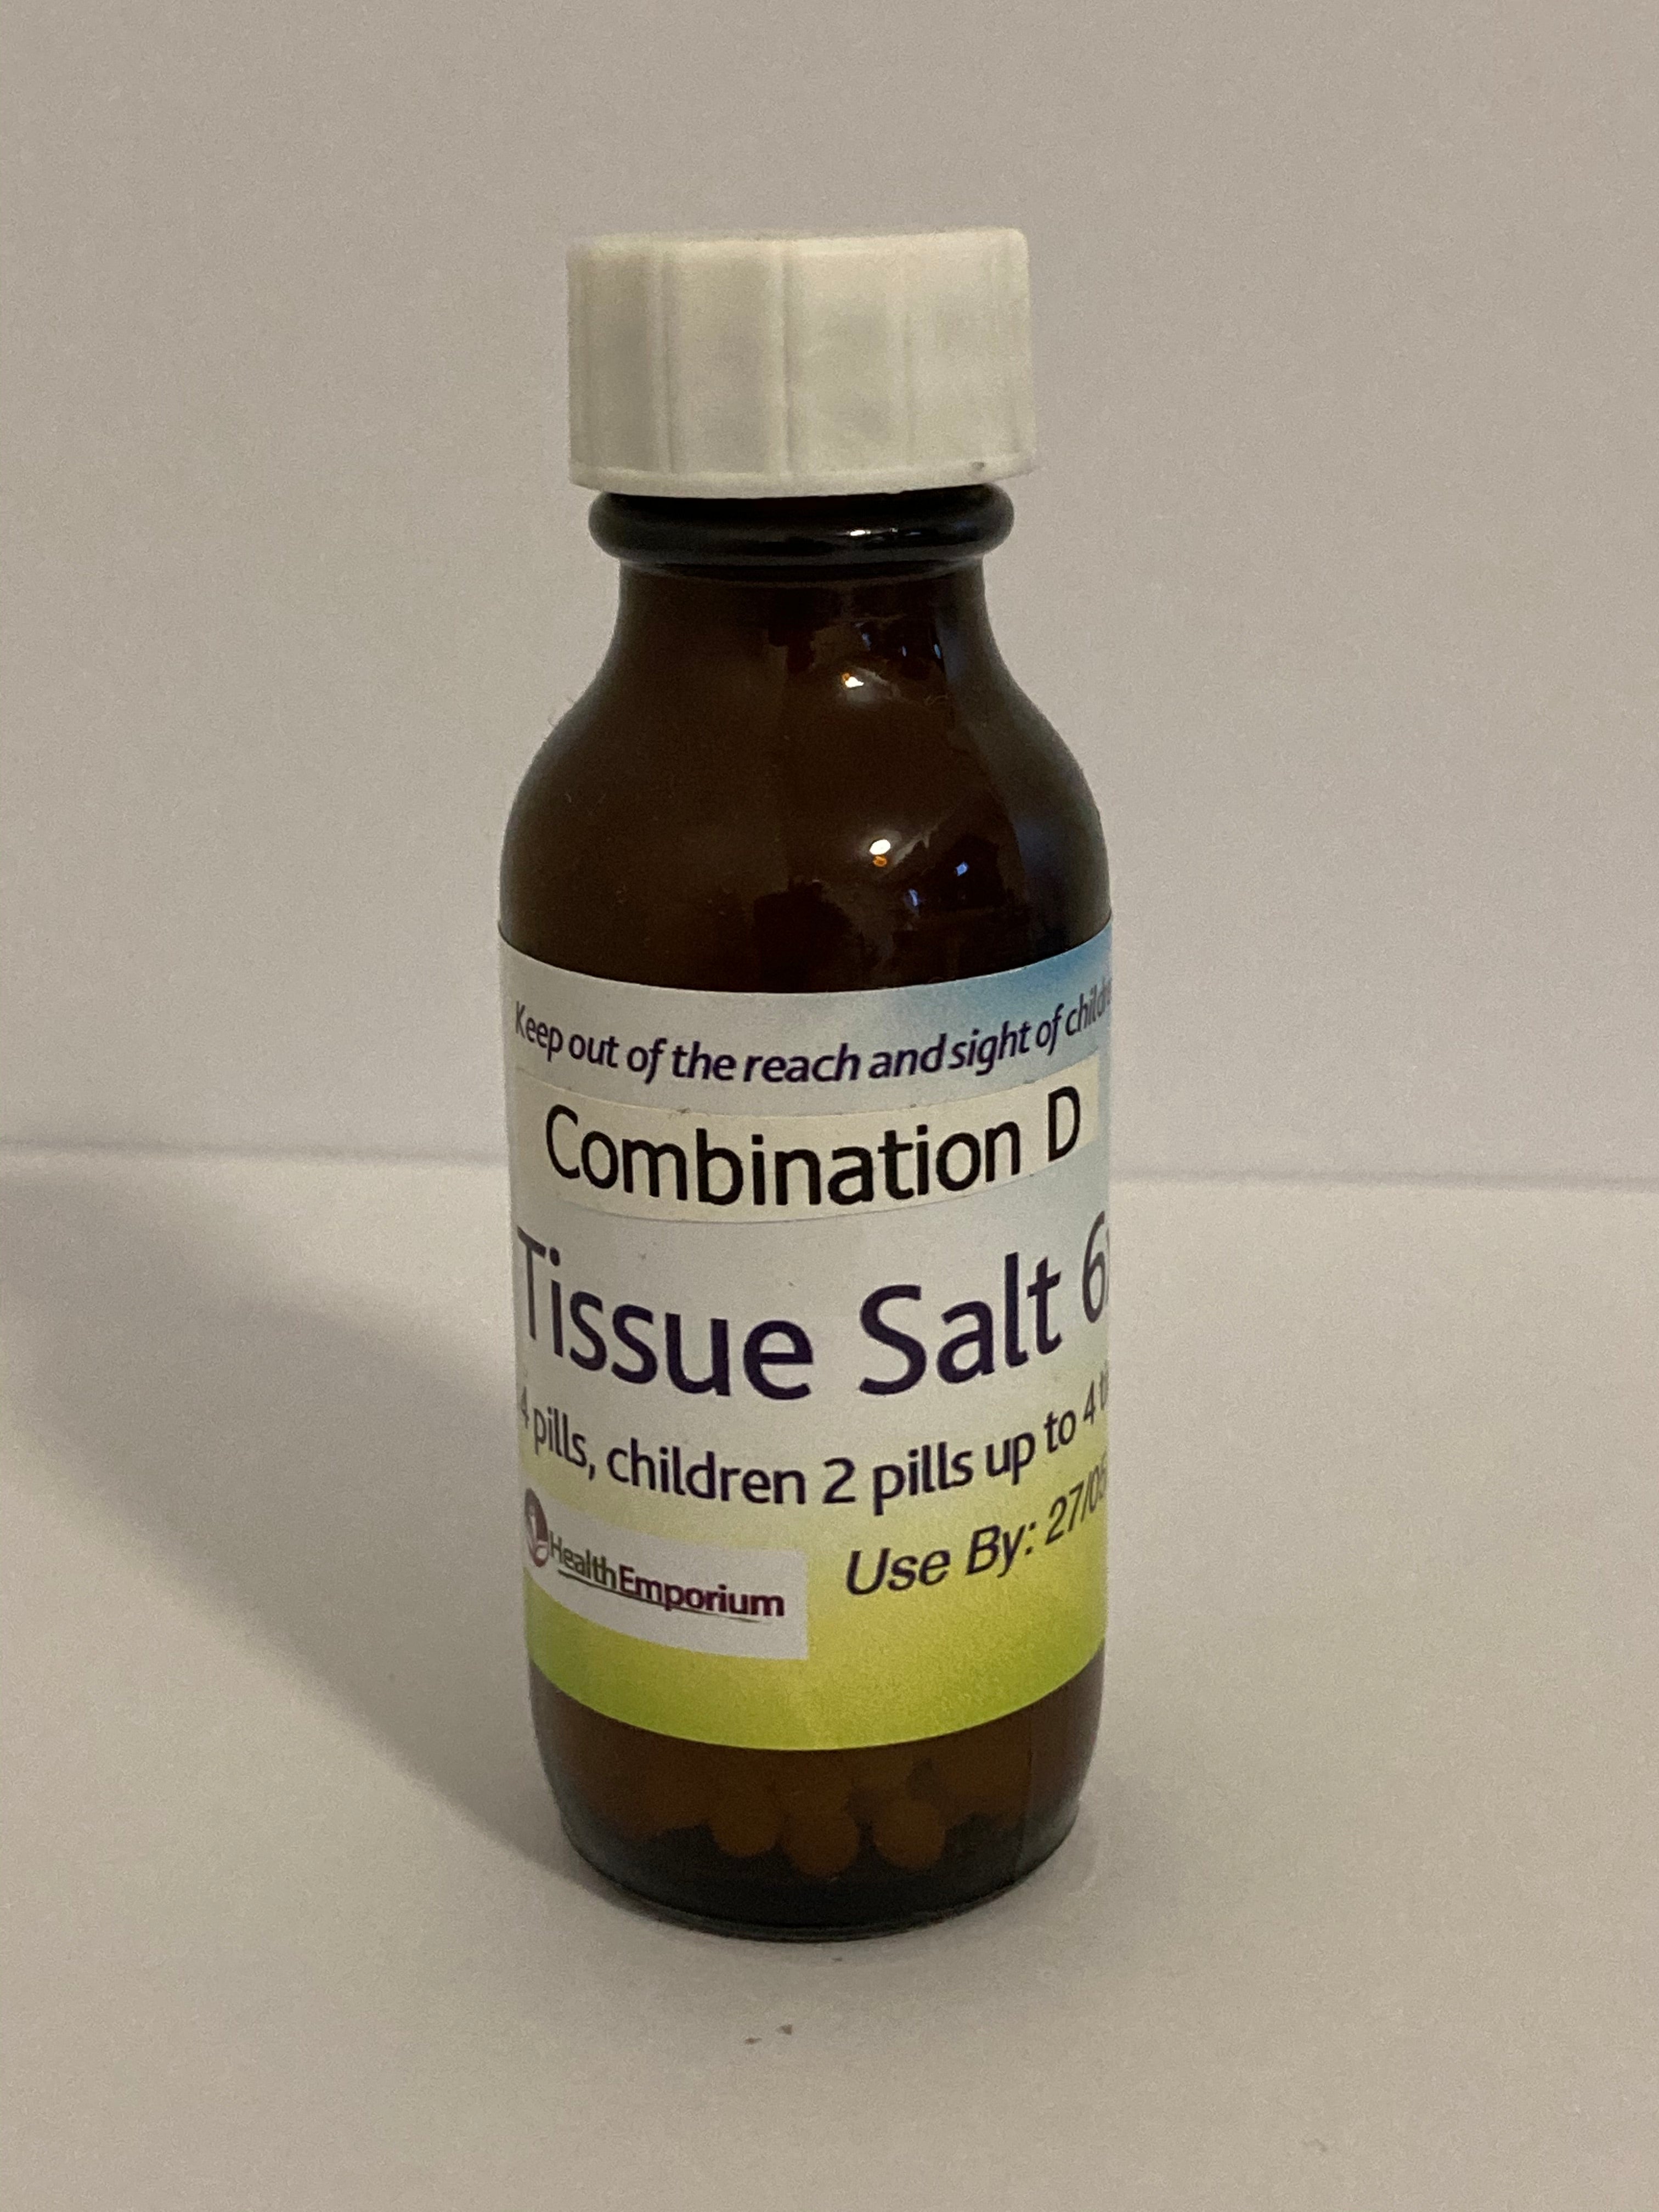 Combination D Tissue Salt